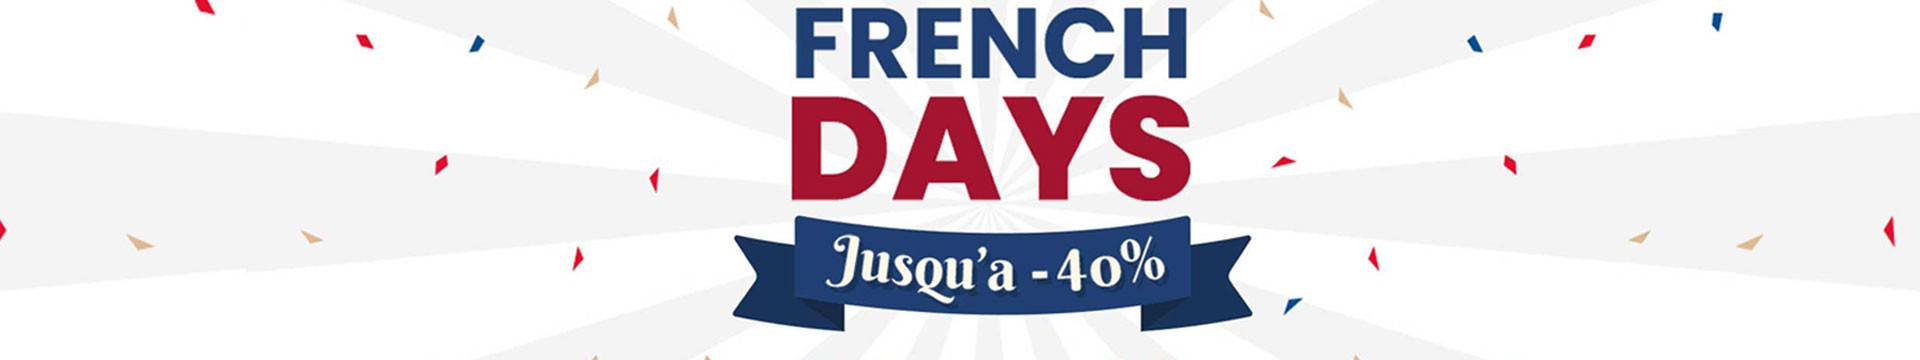 French Days -40%